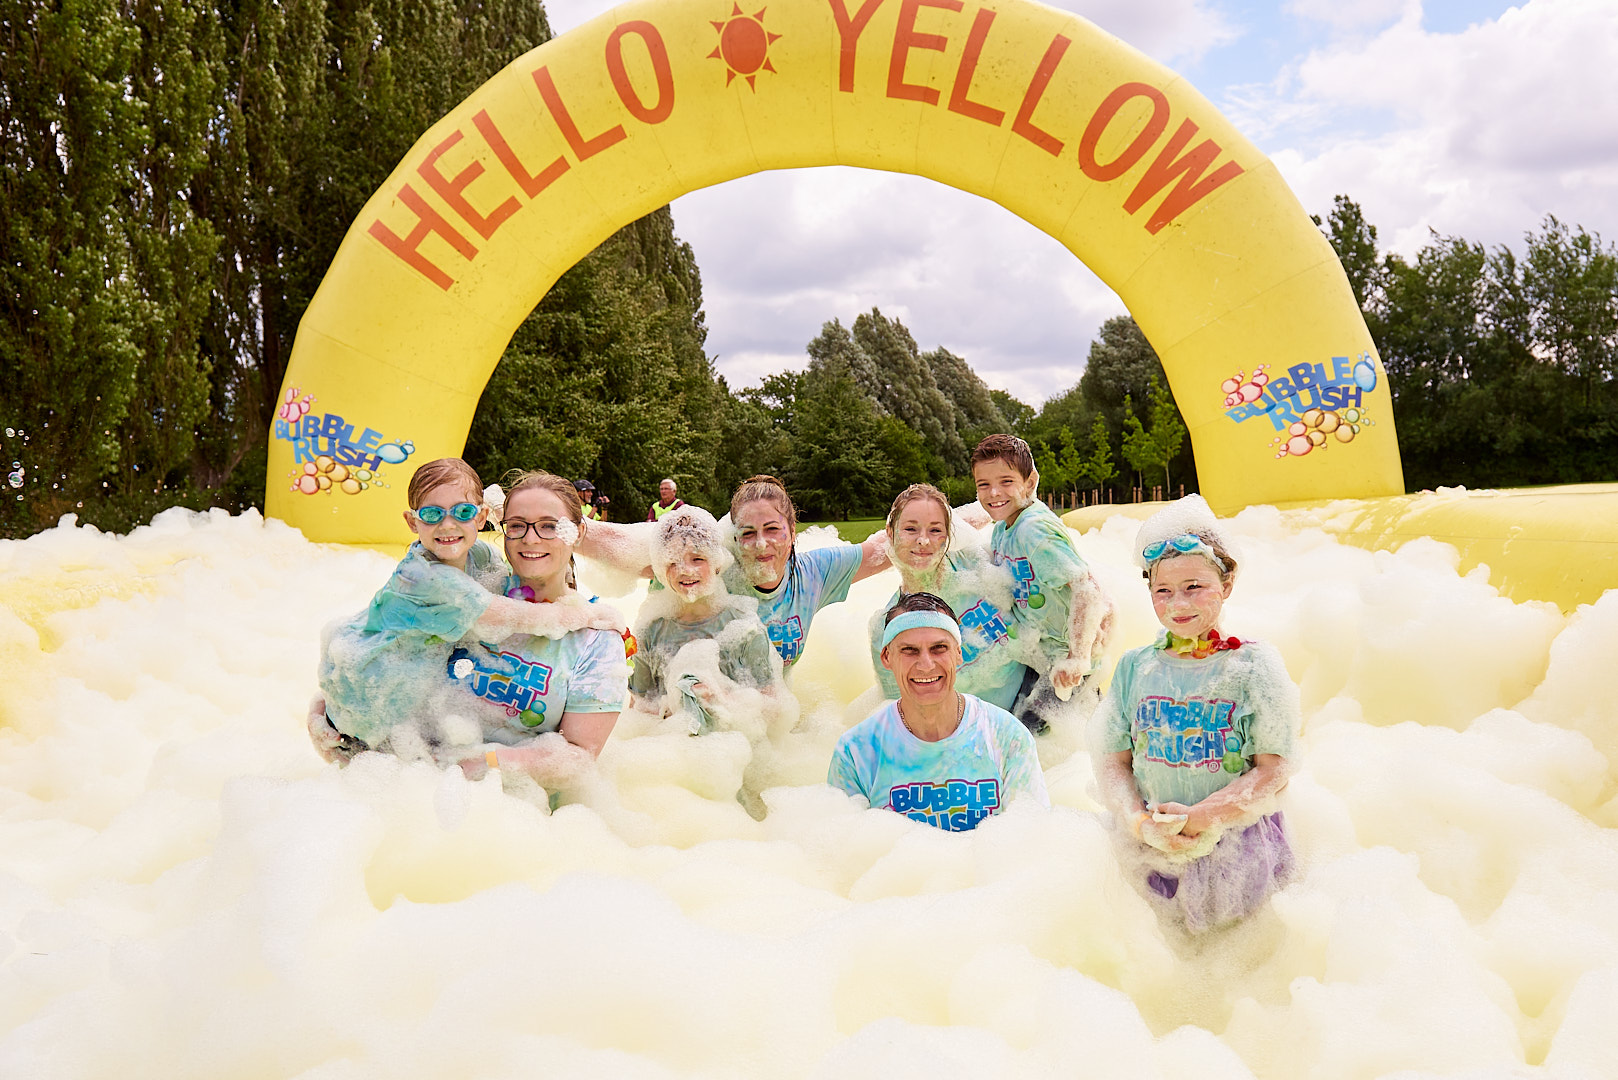 Bubble Rush participants surrounded by yellow bubbles.